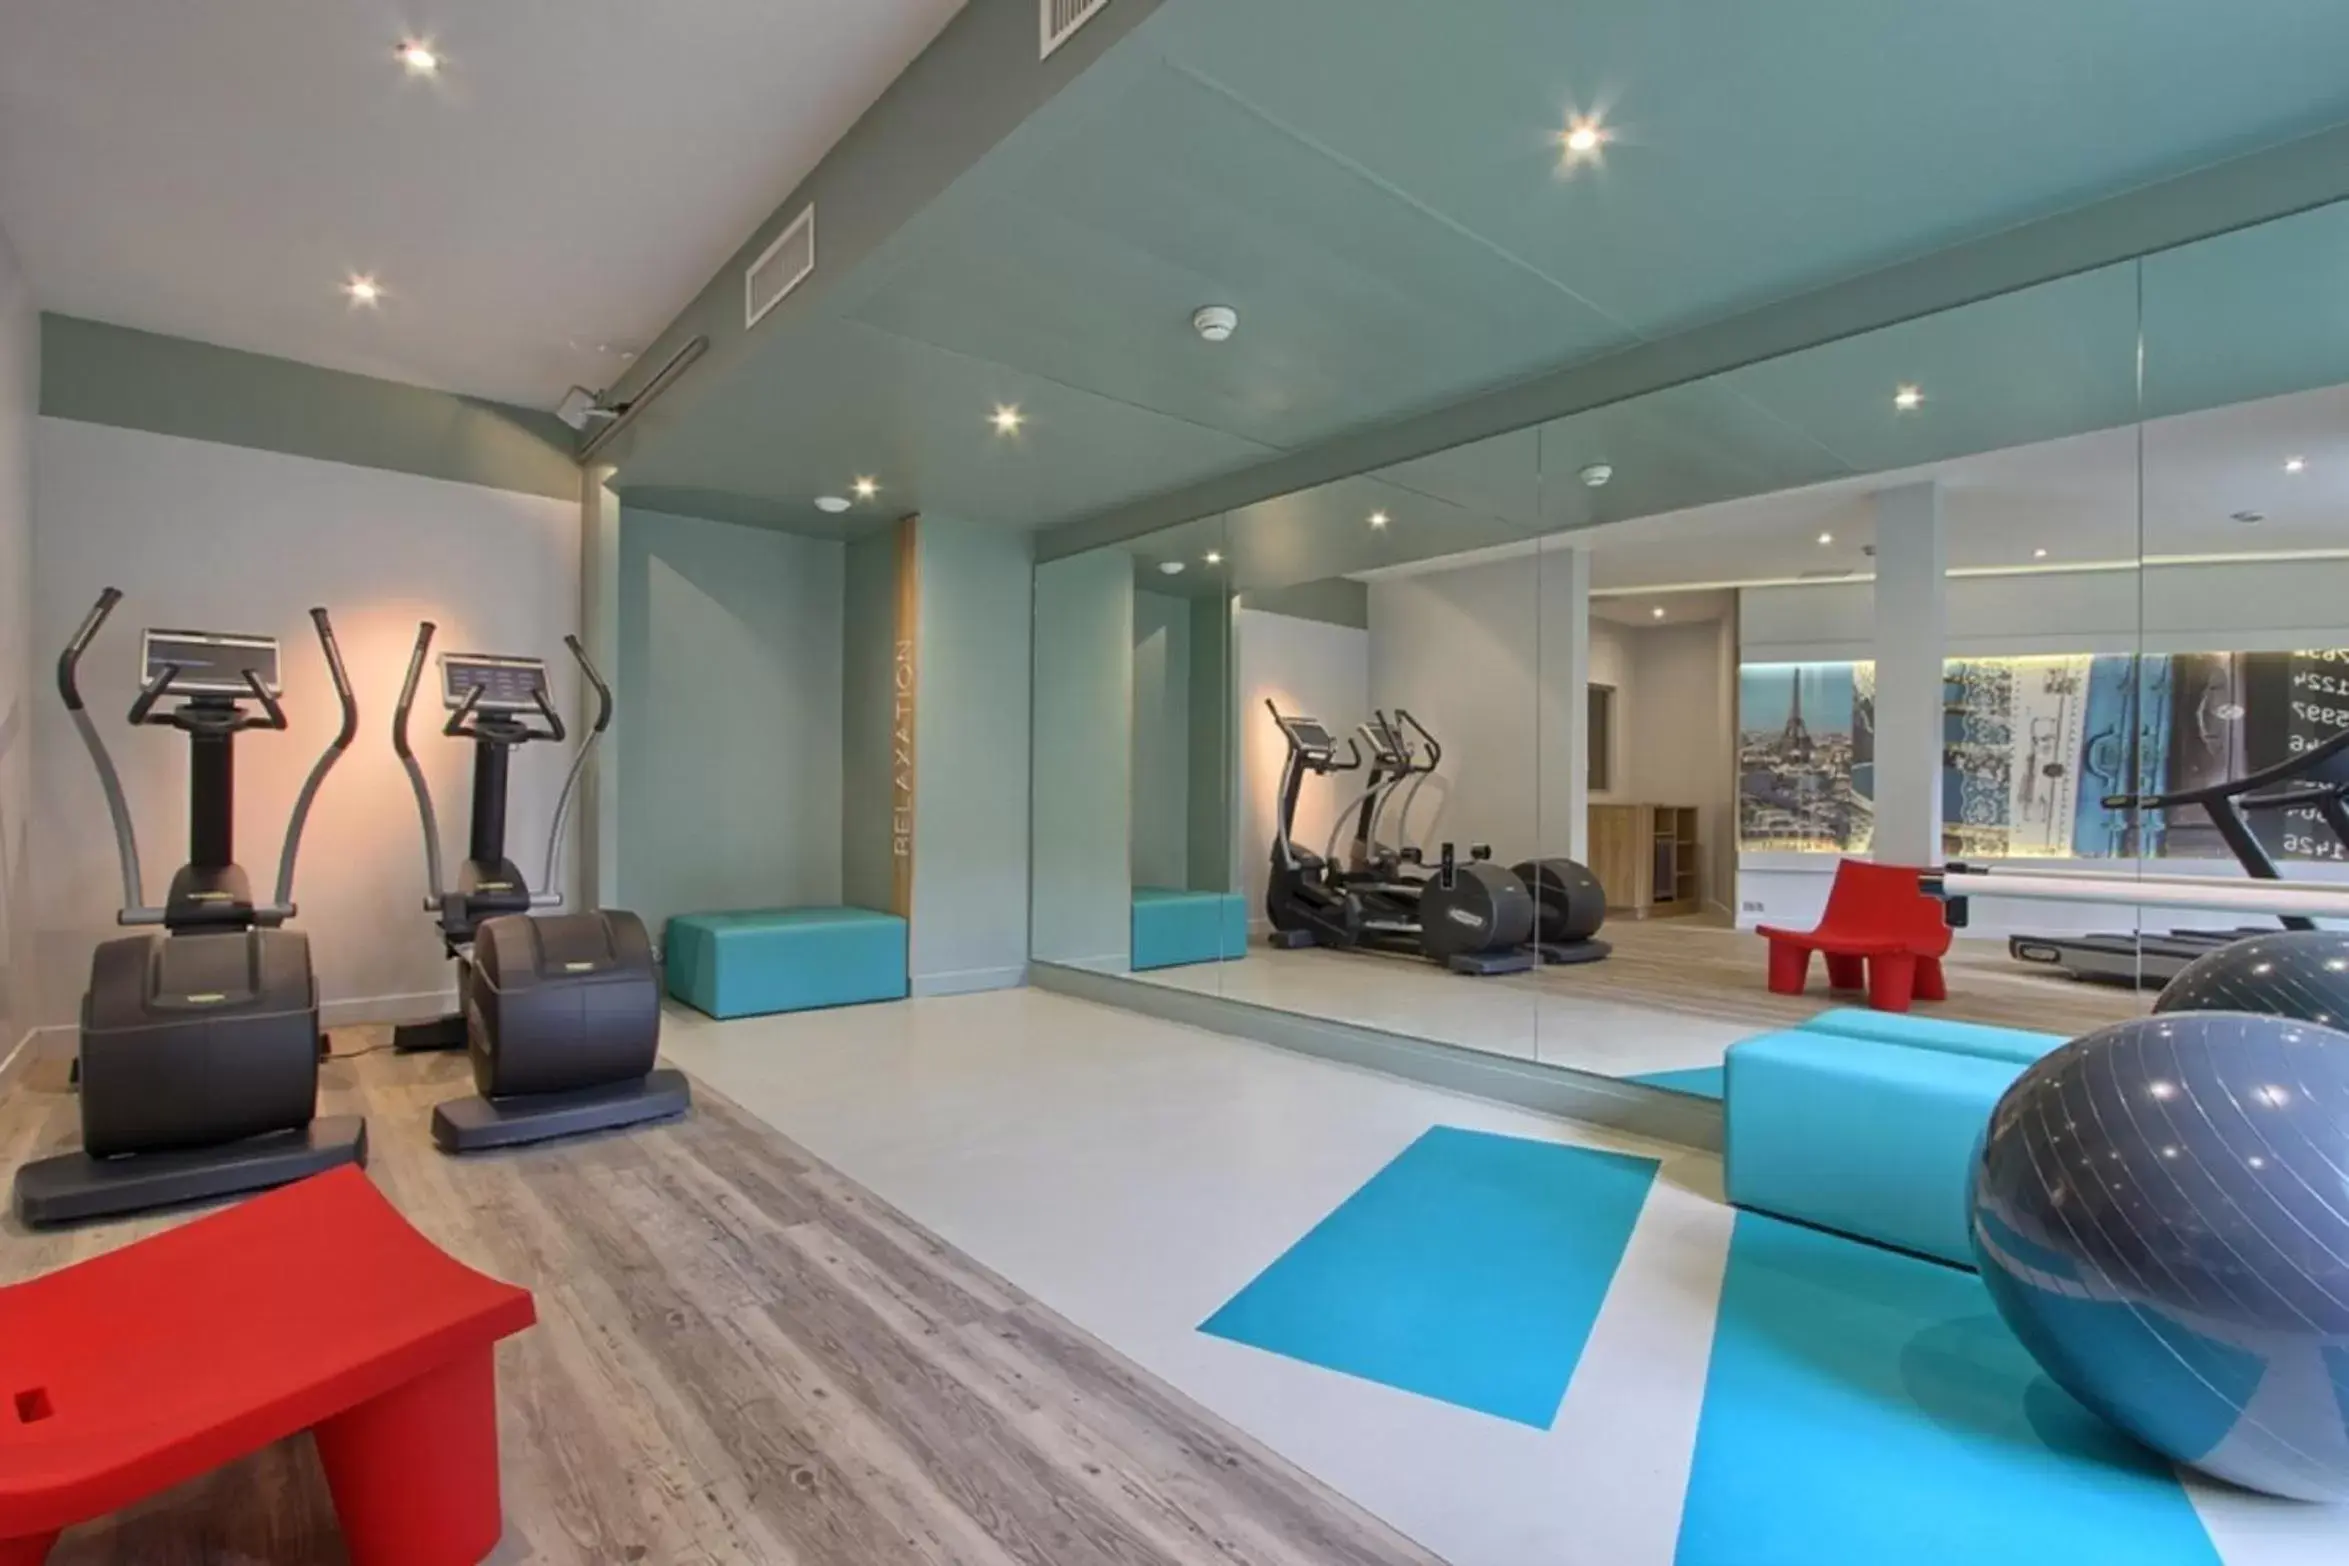 Fitness centre/facilities, Fitness Center/Facilities in Mercure Paris Roissy CDG